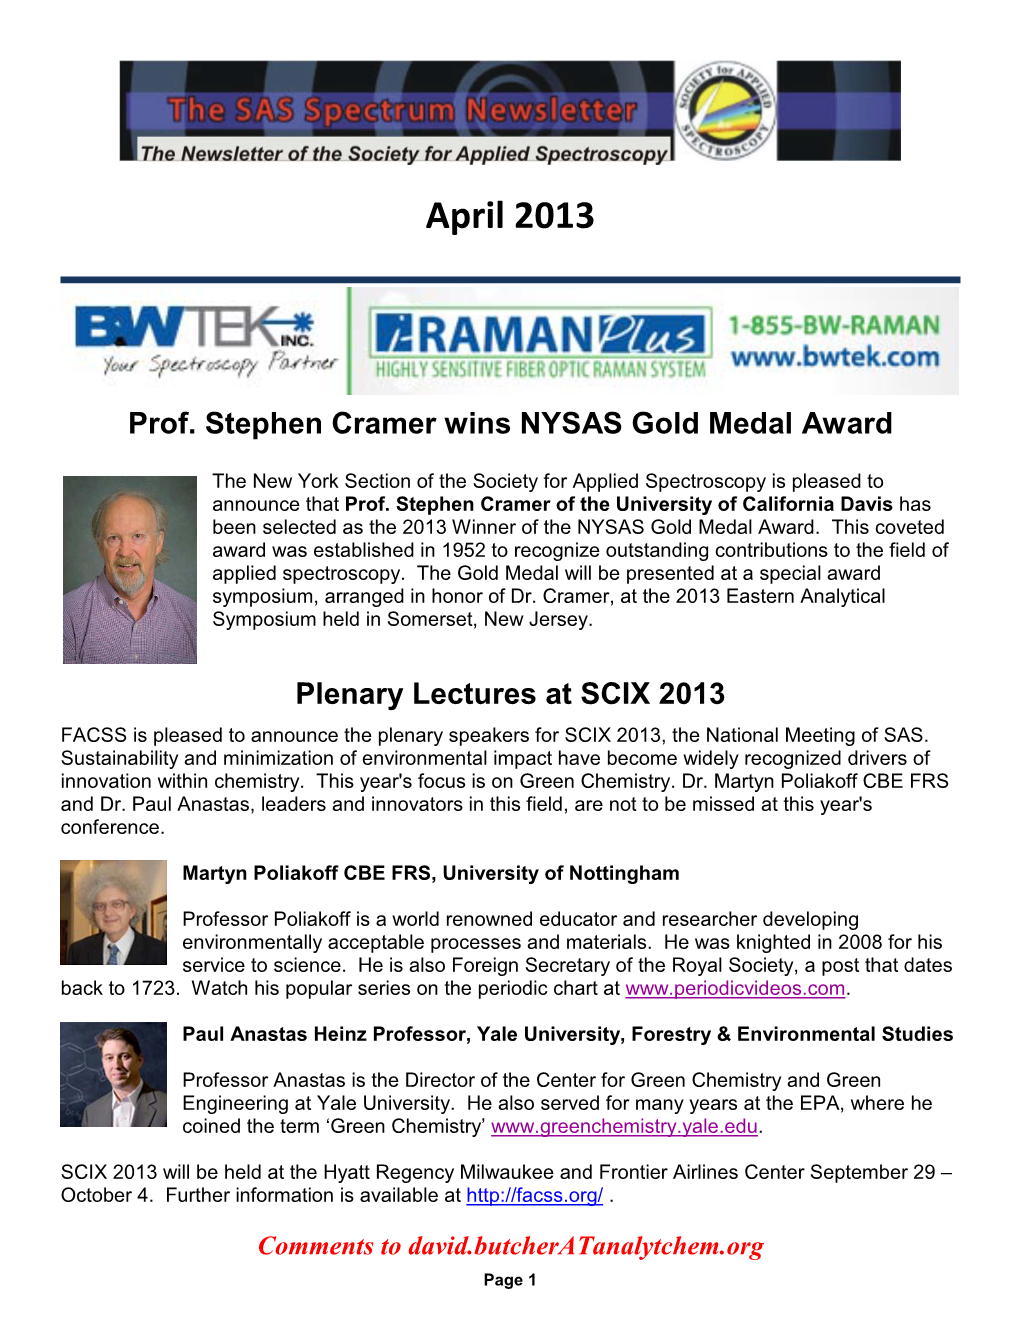 April 2013 Newsletter. Professor Stephen Cramer Wins NYSAS Gold